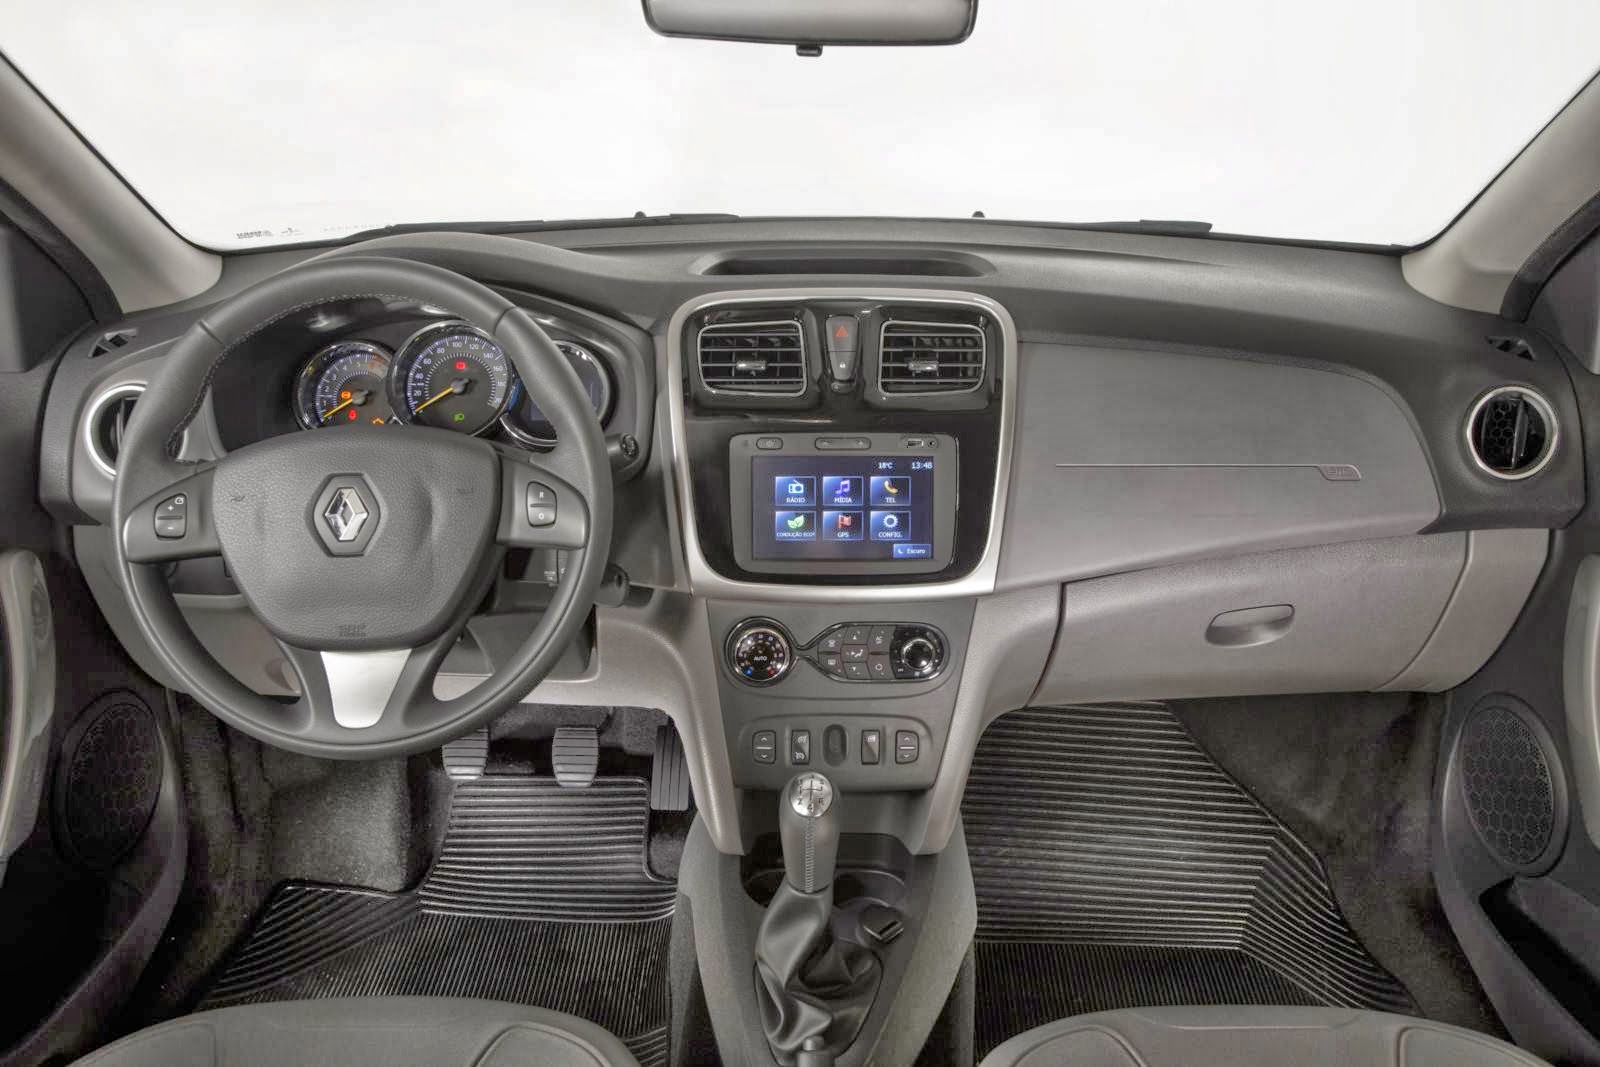 Novo Renault Logan Dynamique 1.6 8V - interior